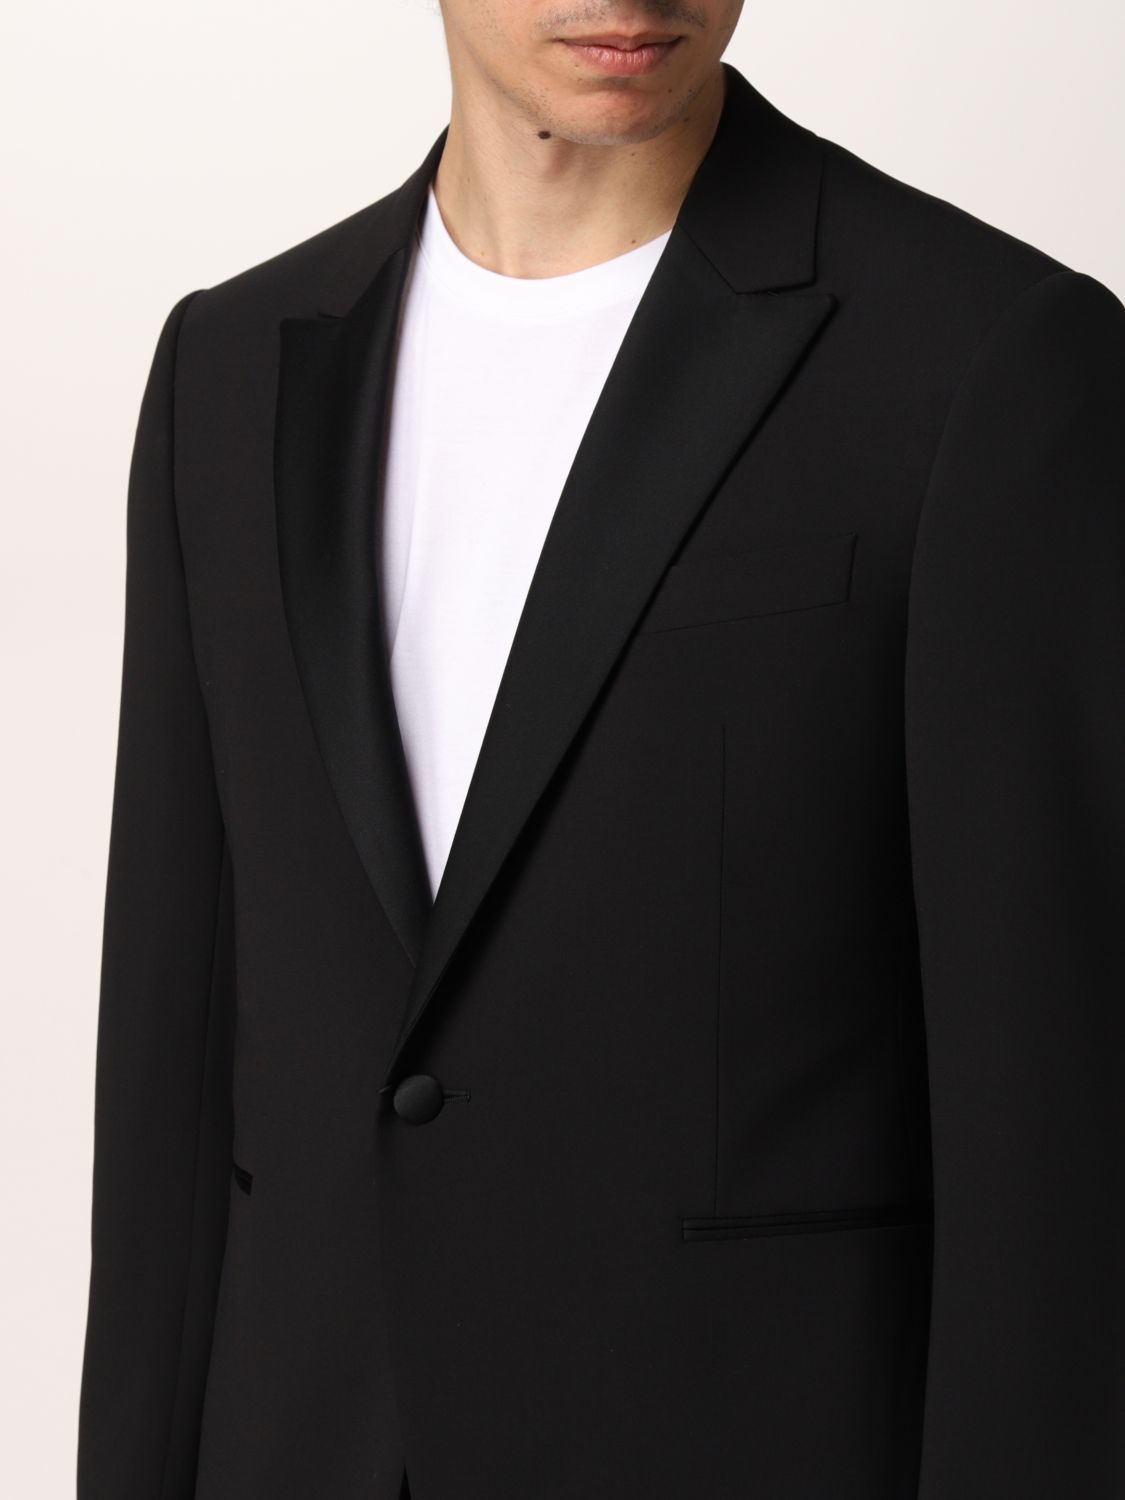 EMPORIO ARMANI: wool tuxedo - Black | Emporio Armani suit I1VMUR01506  online on 